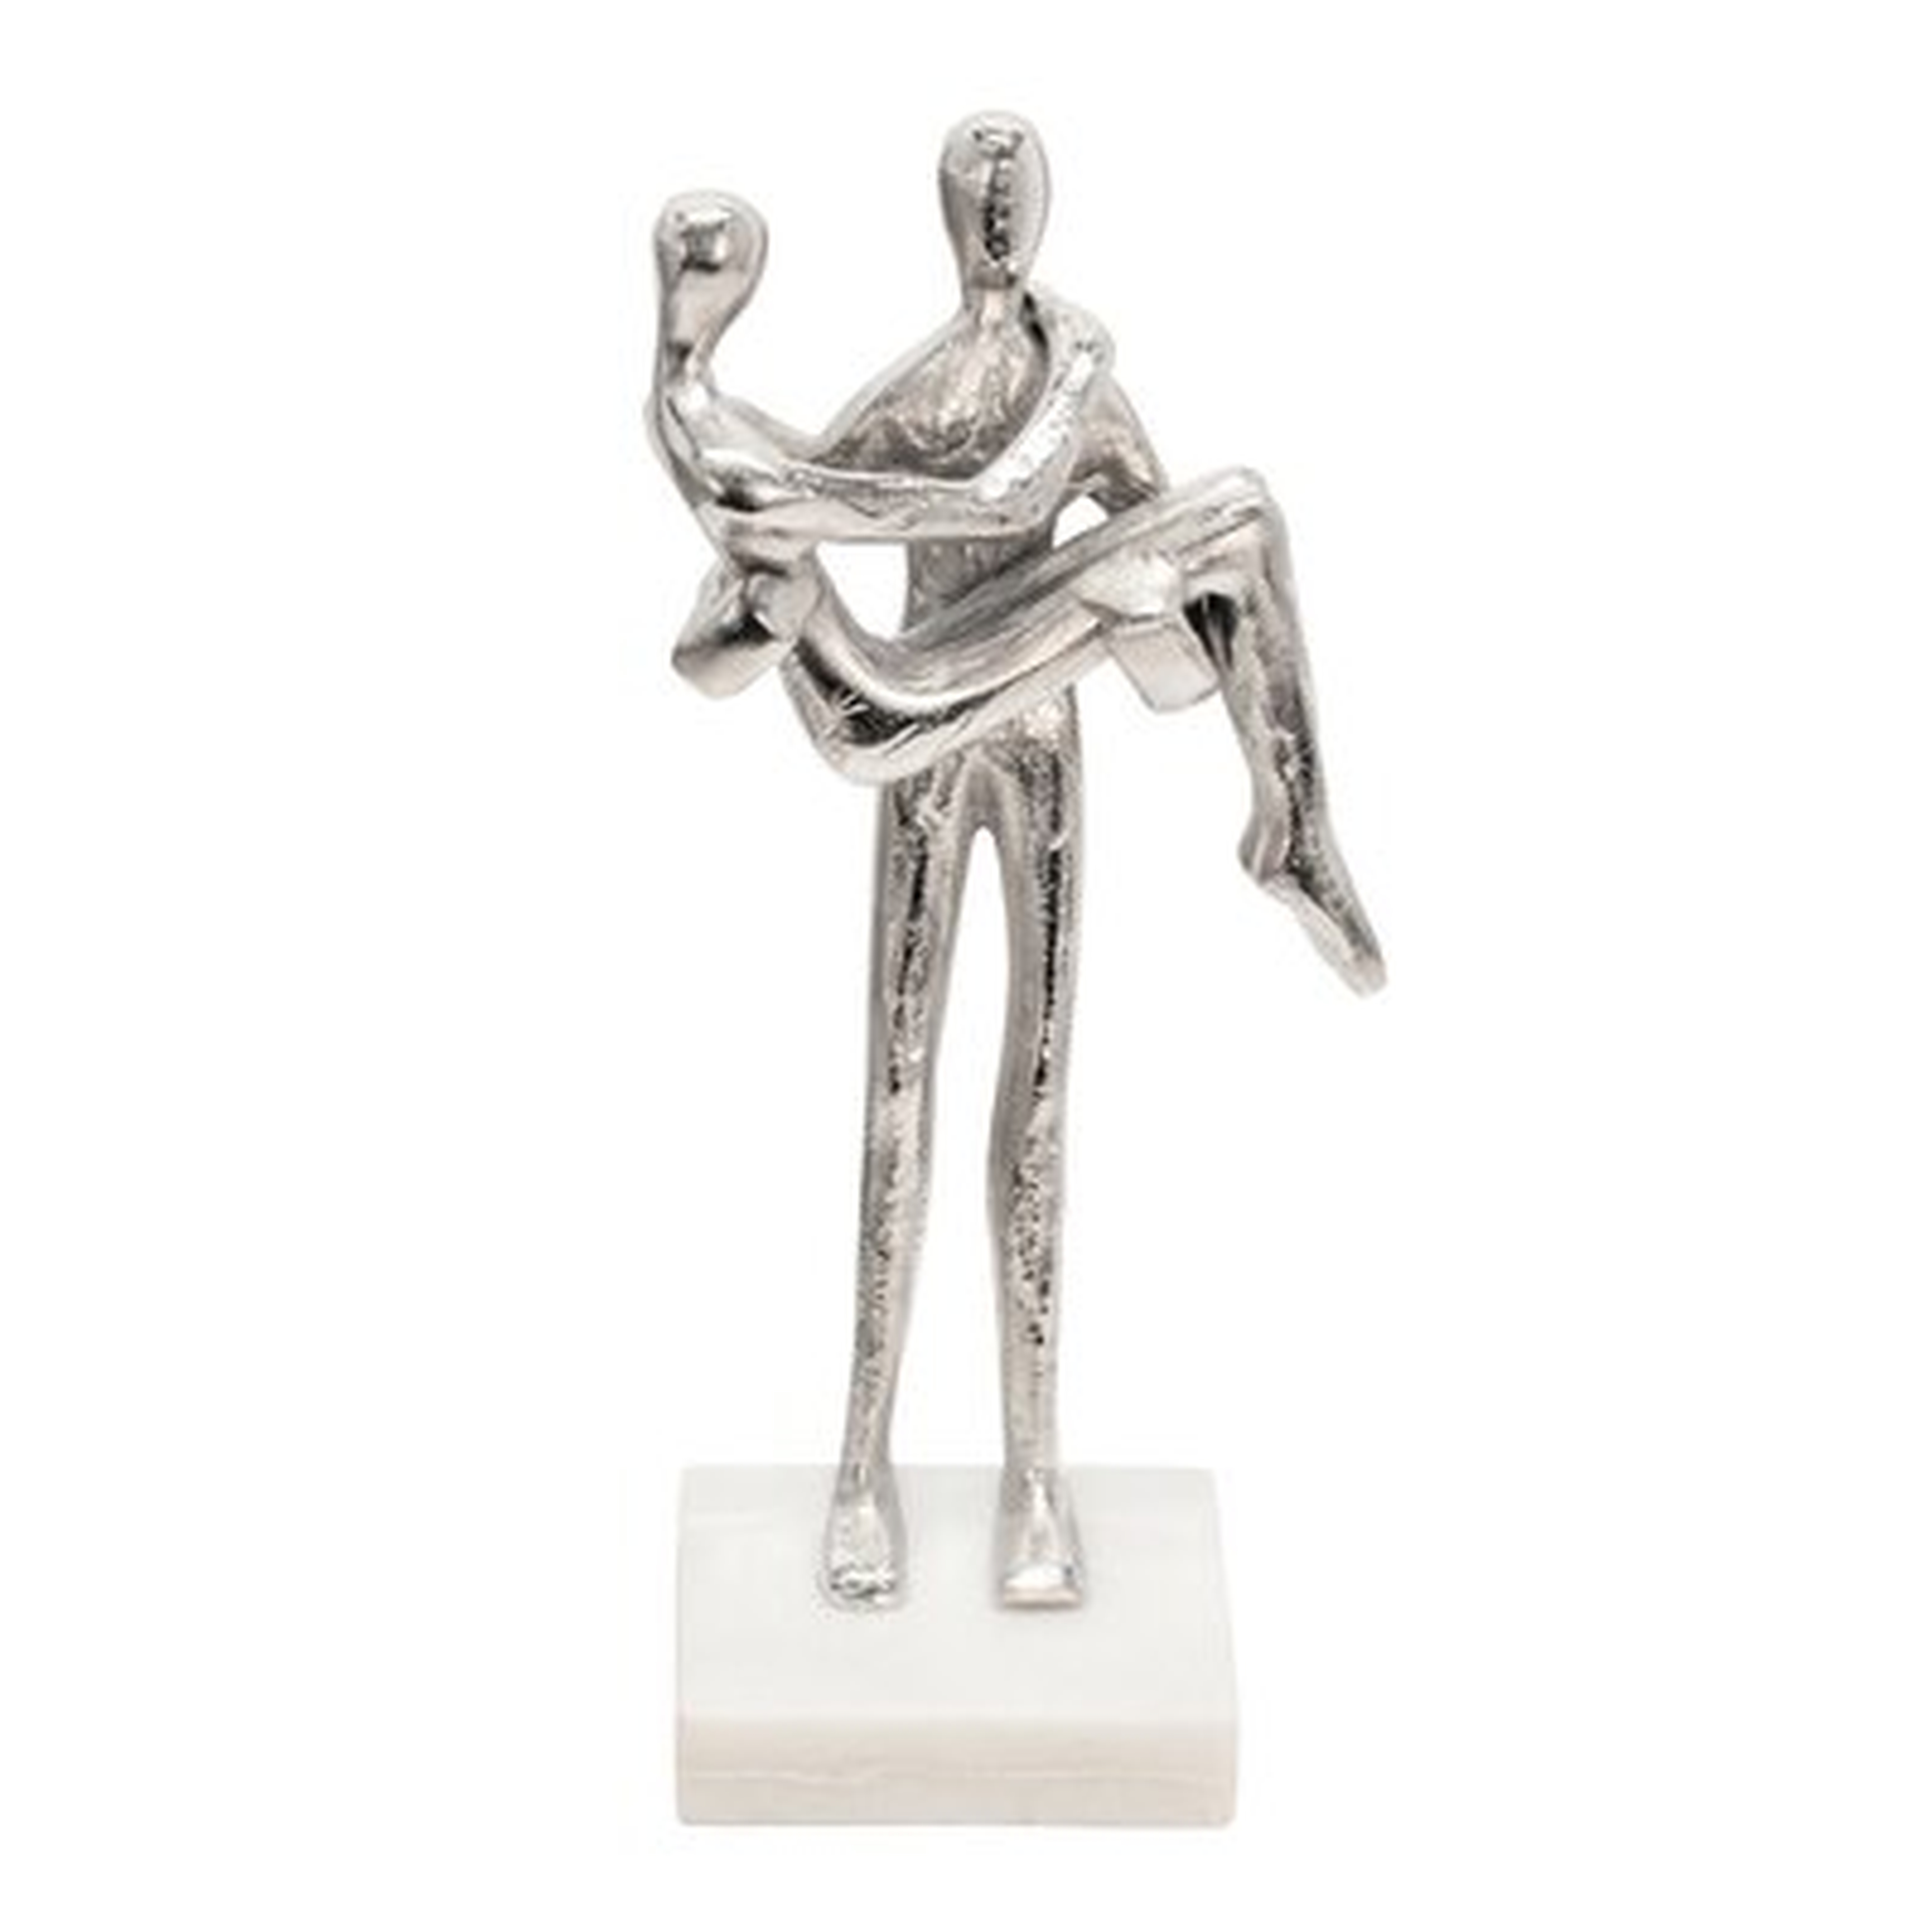 Agit Metal Couple Deco Figurine - Wayfair